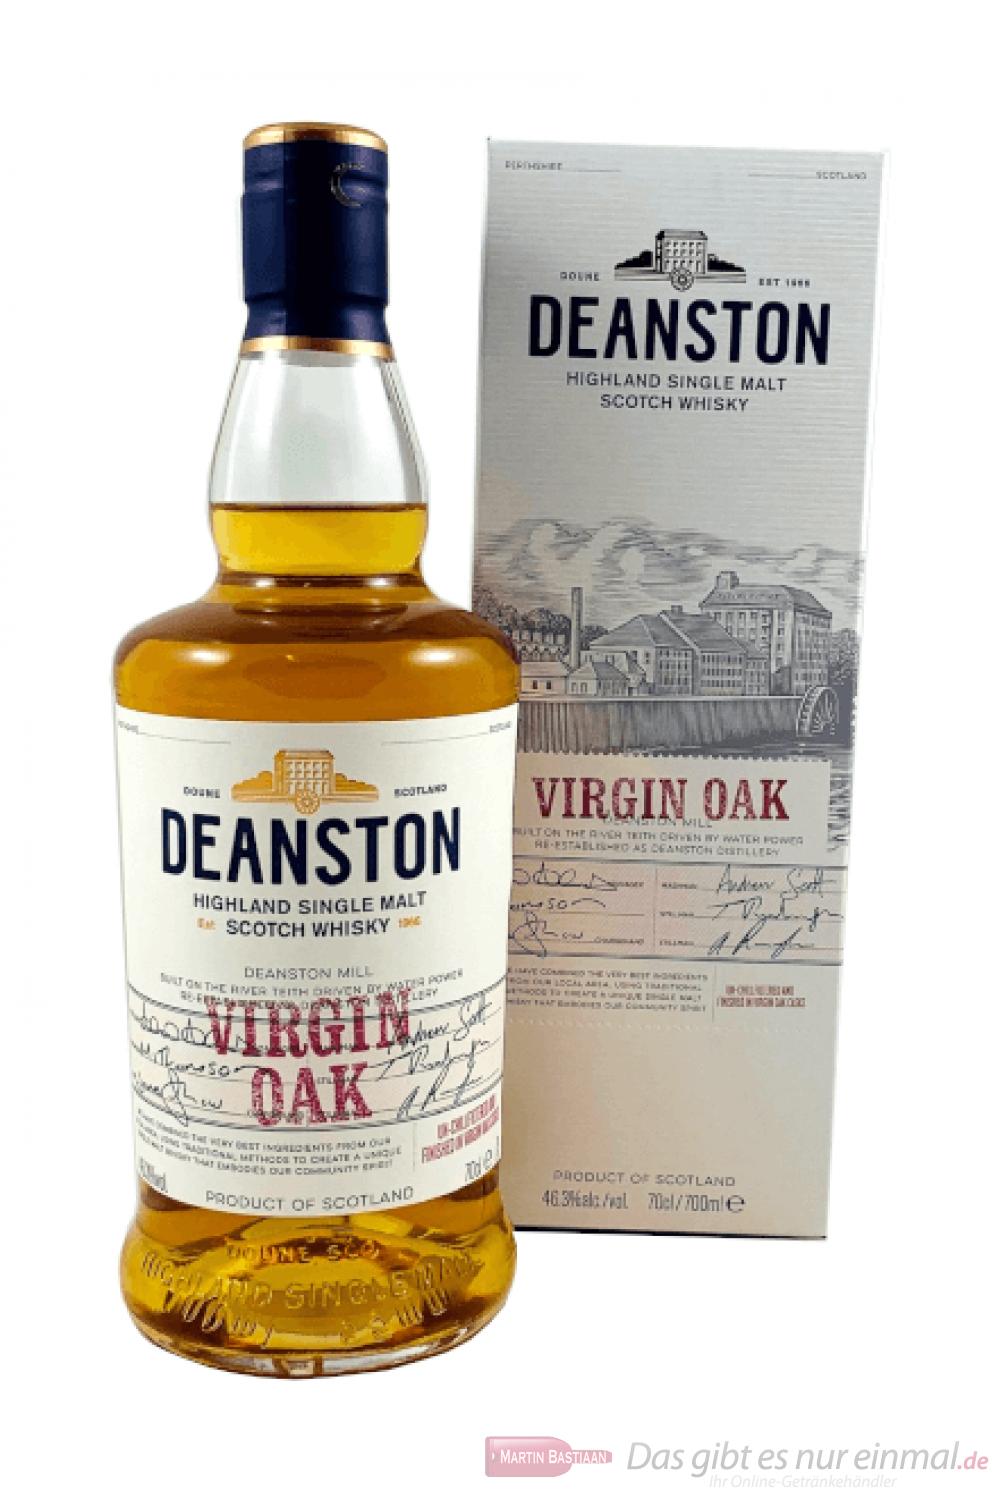 deanston highland single malt scotch whisky review